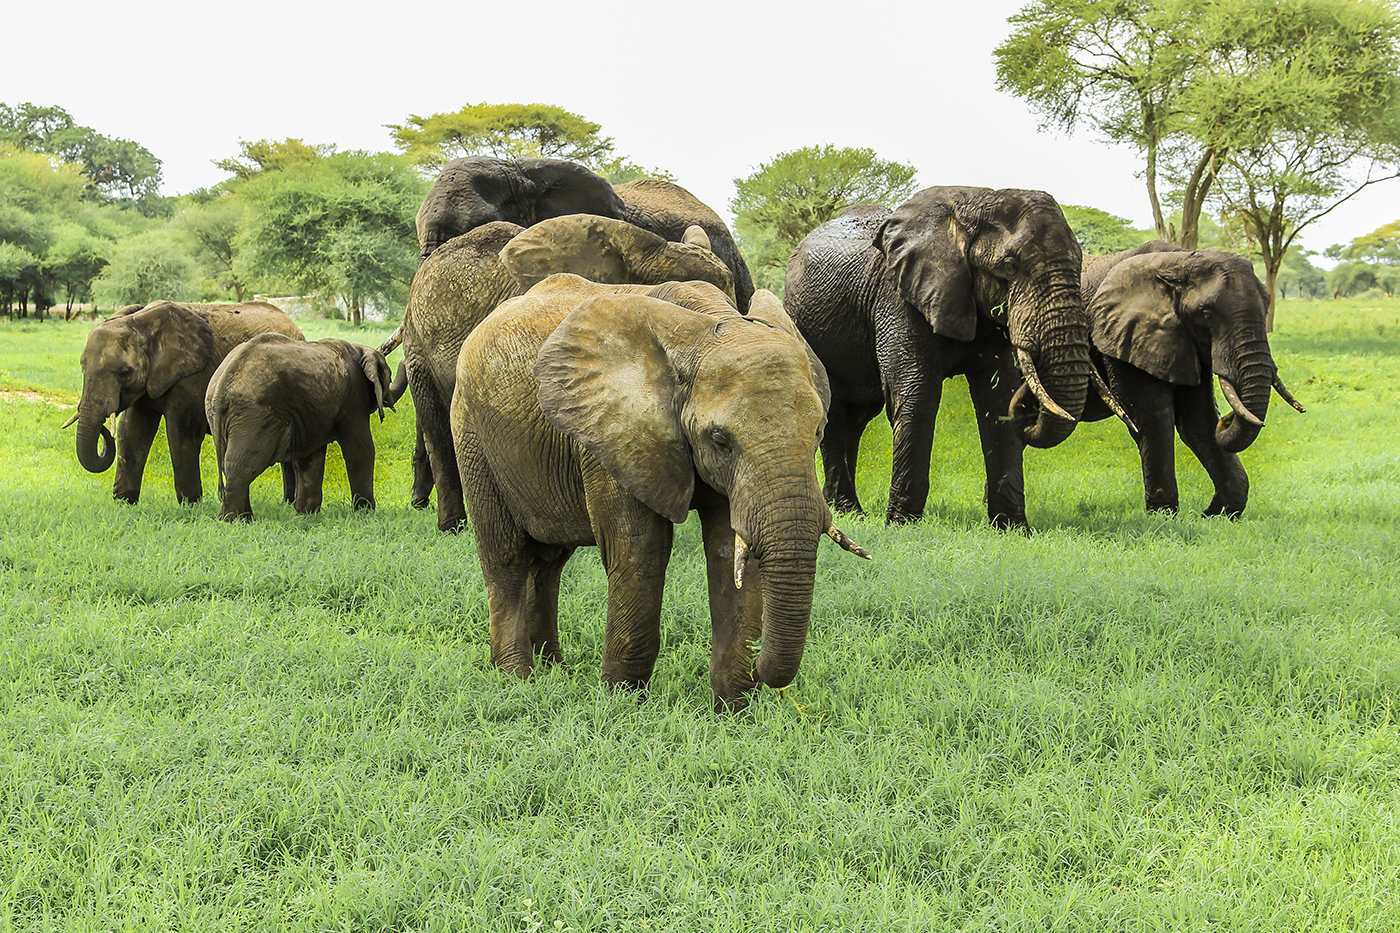 A family of African elephants in Tarangire National Park Tanzania on green grass savanna.